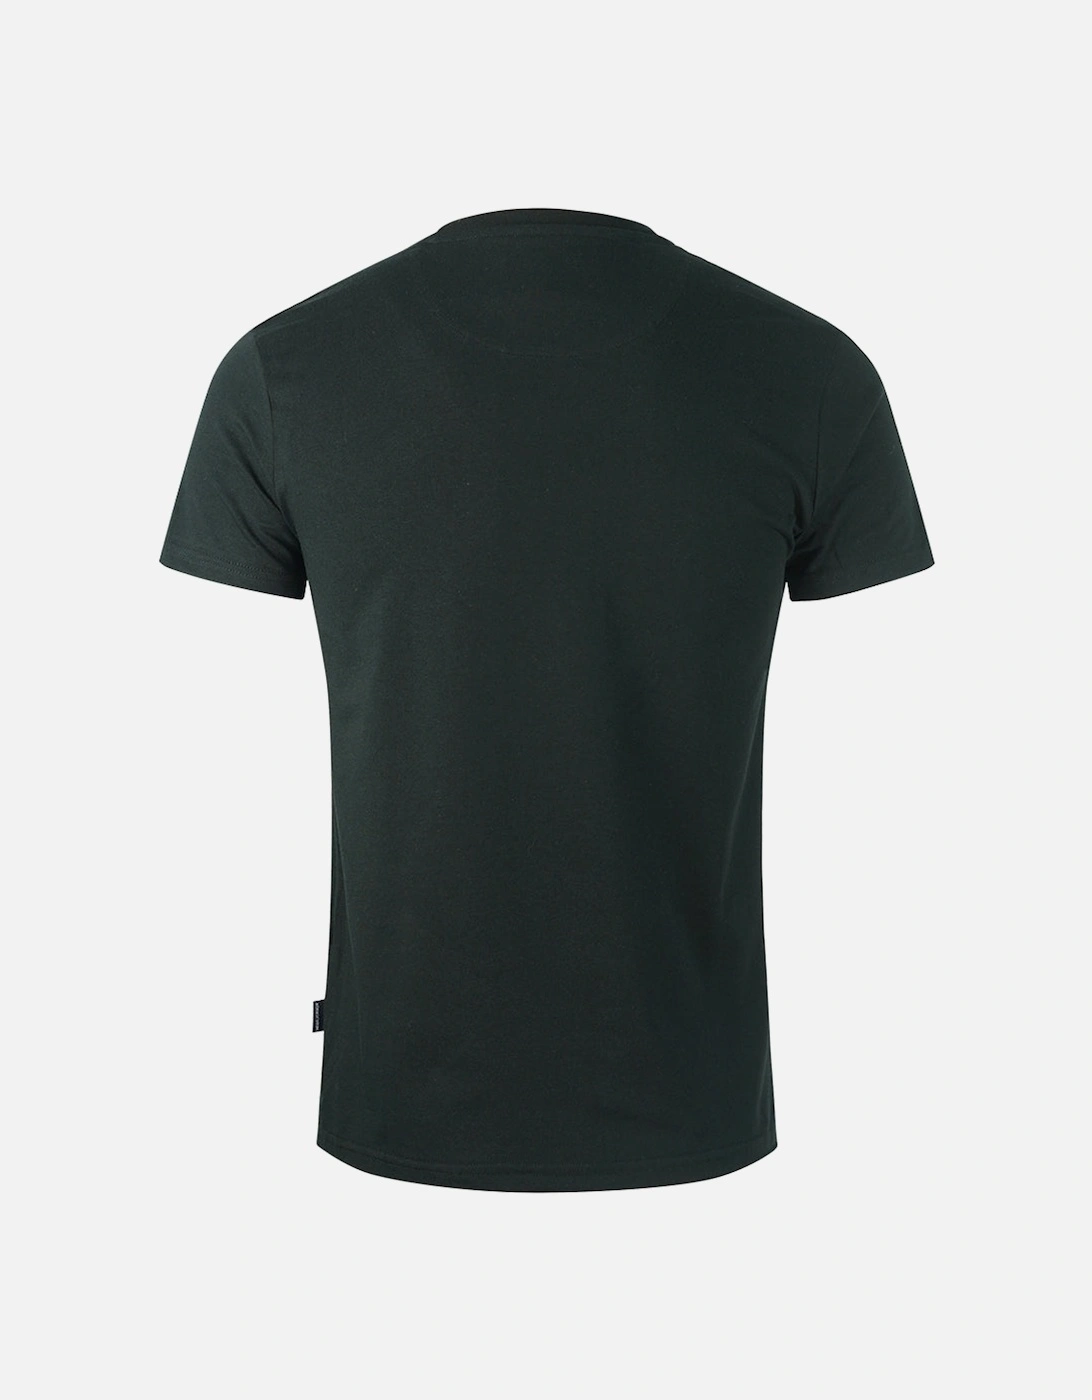 Large Pixeled Aldis Logo Black T-Shirt